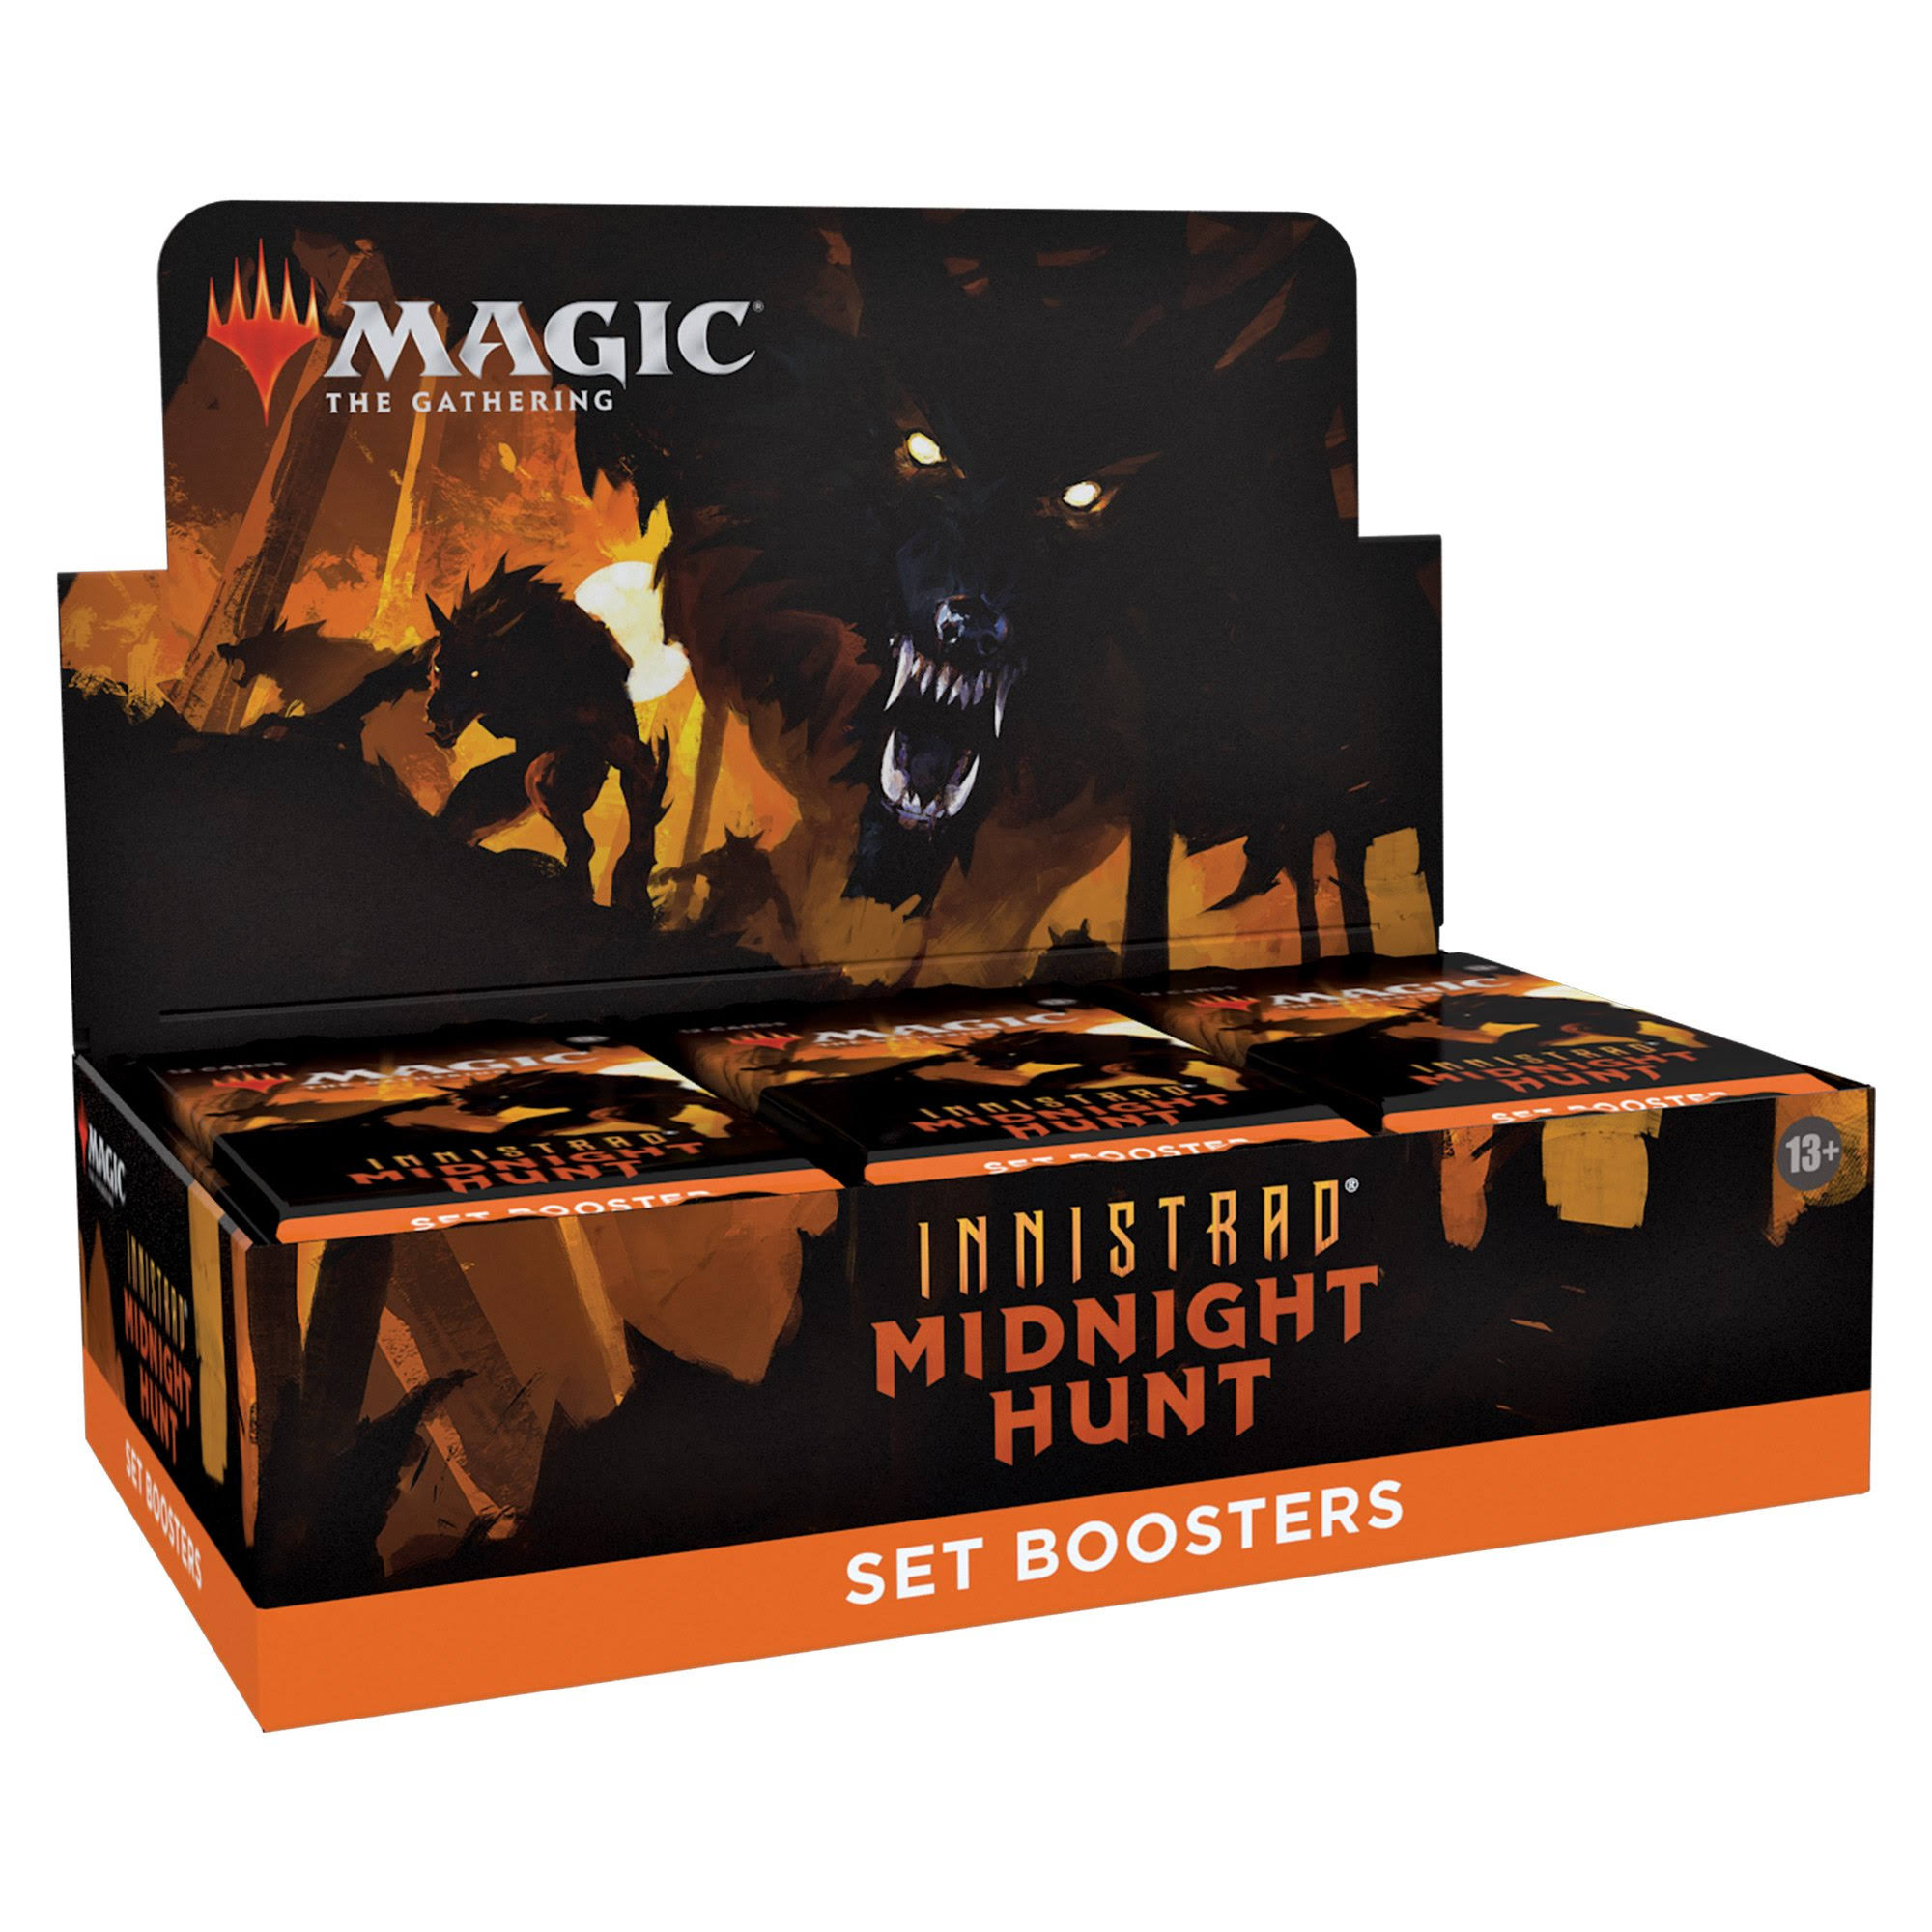 Magic The Gathering - Innistrad: Midnight Hunt - Set Booster Box